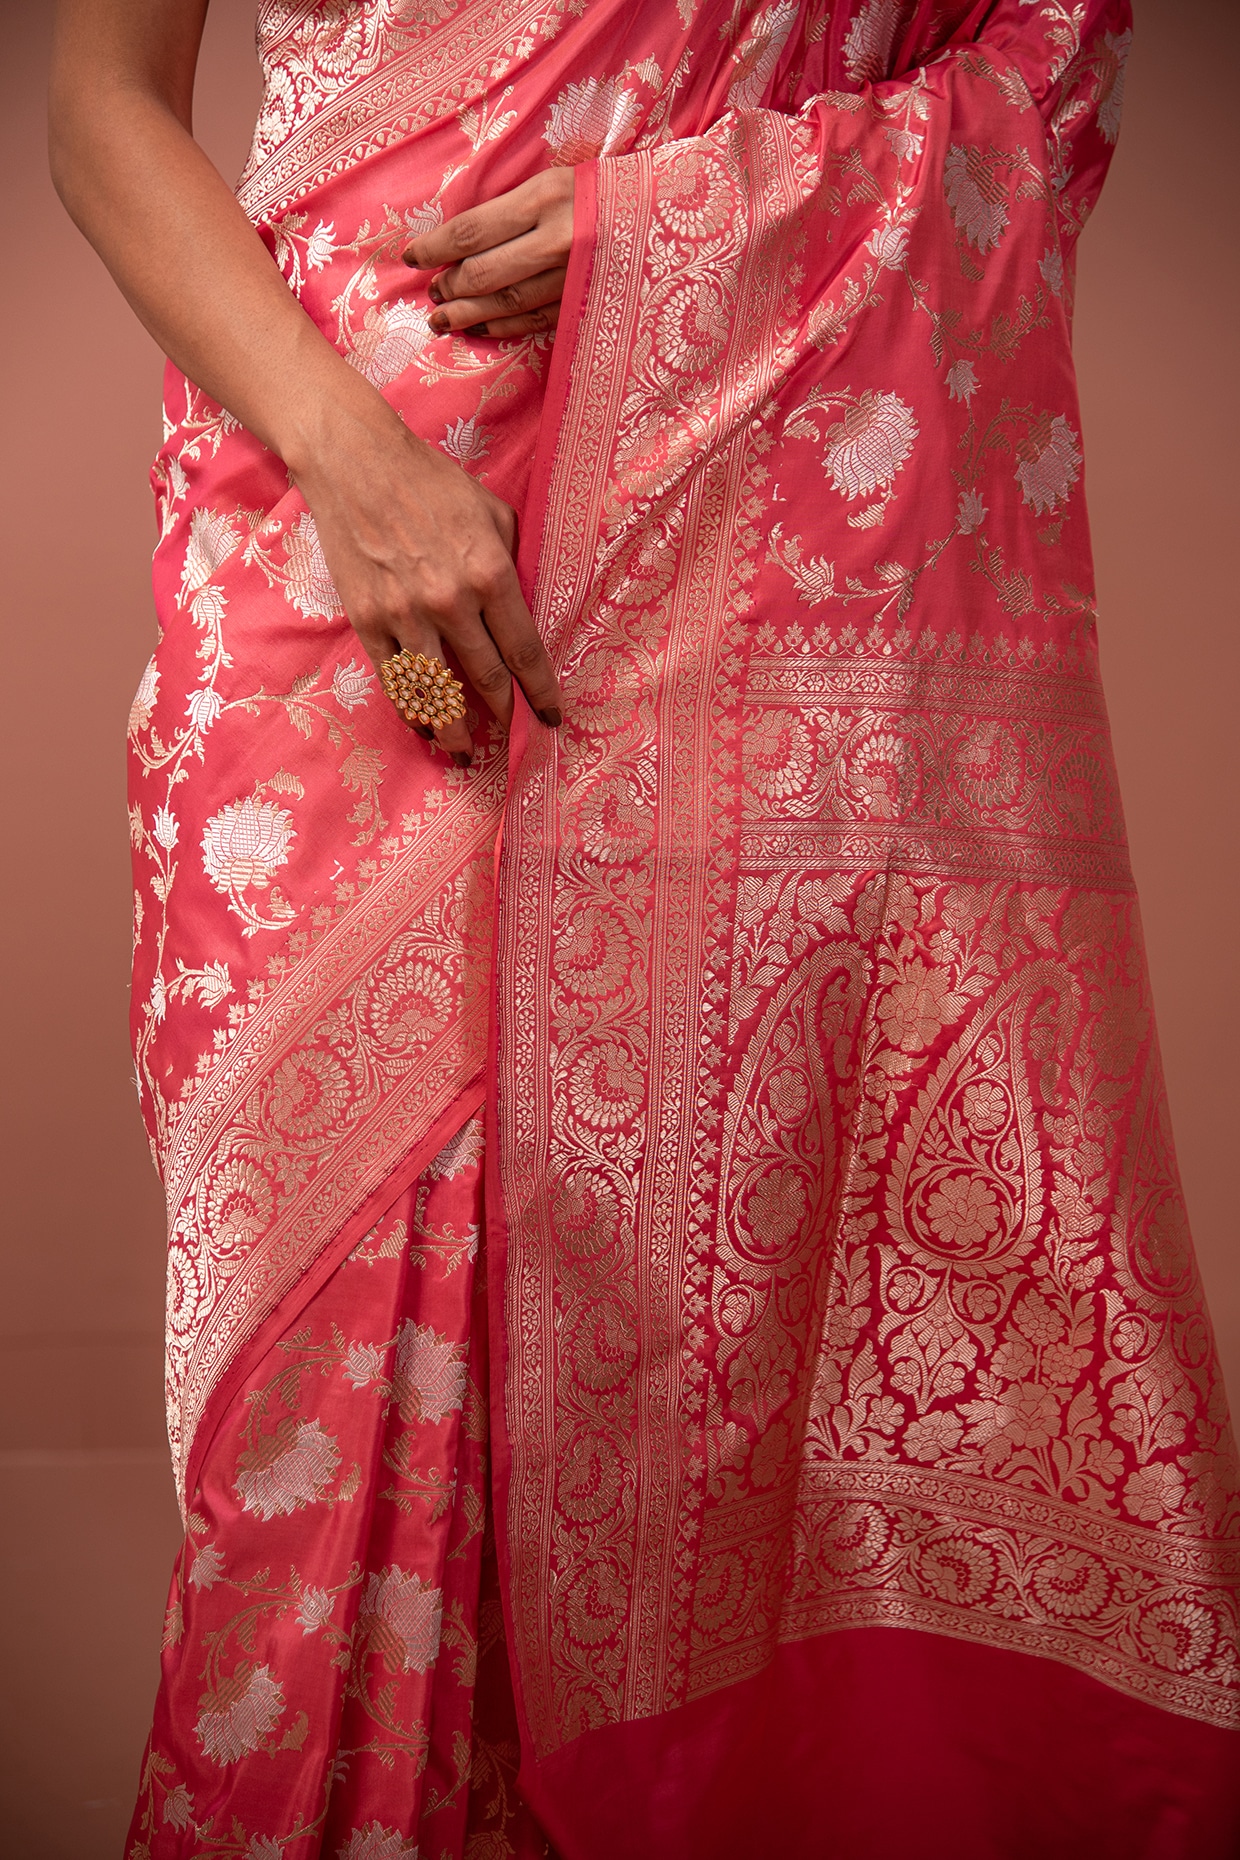 Shop Elegant Red and Orange Soft Cotton Handloom Saree for Women